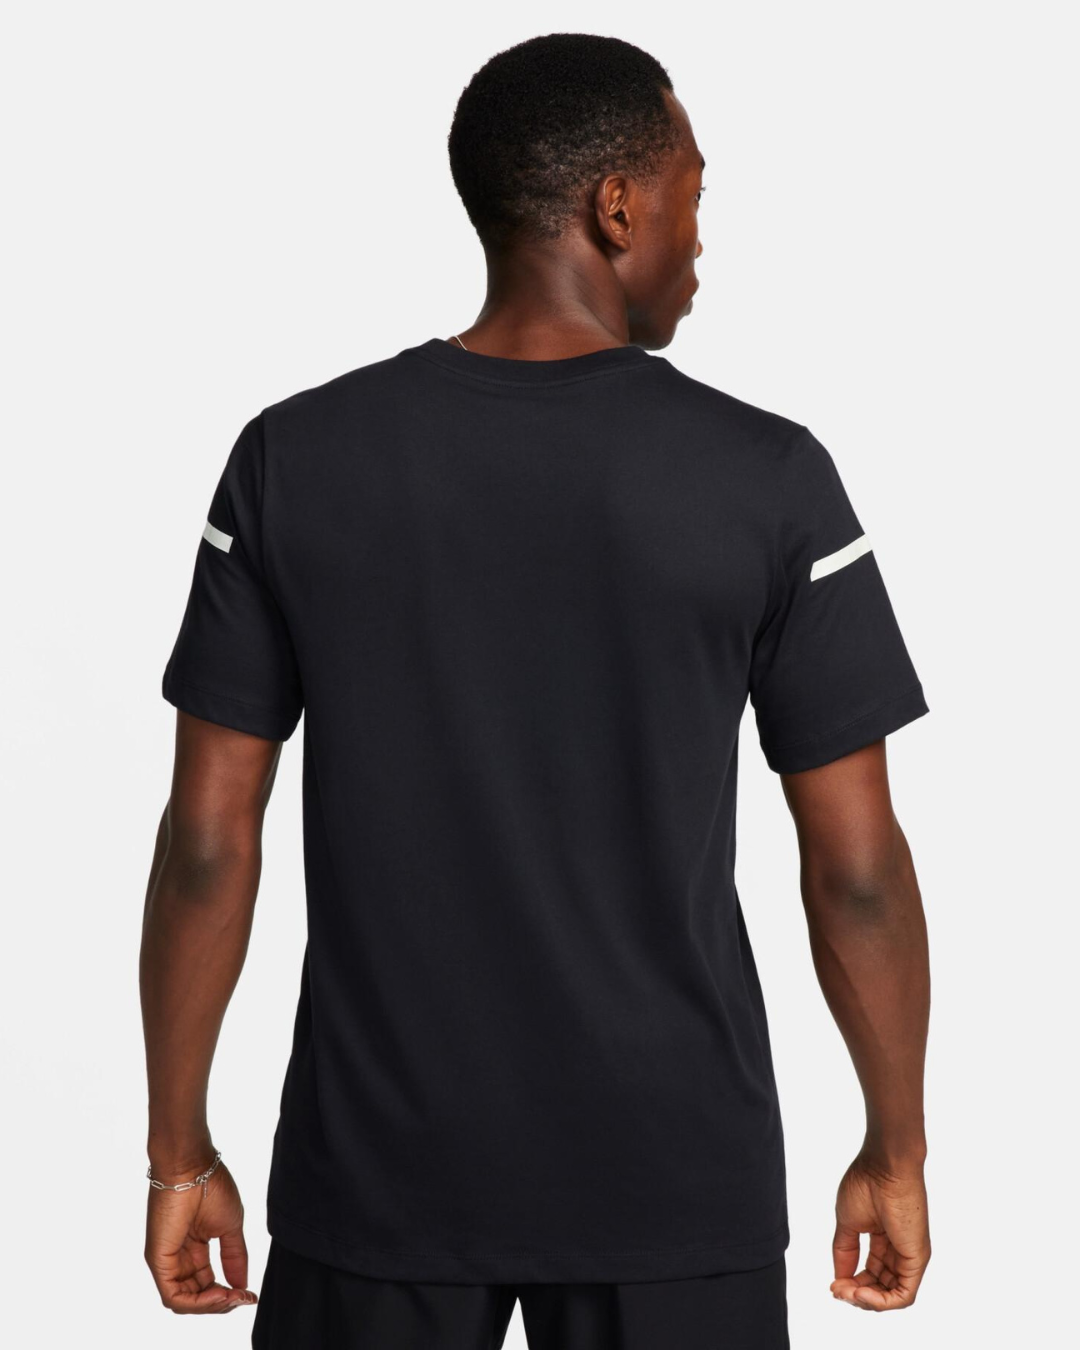 Nike Dri-FIT T-shirt - Black